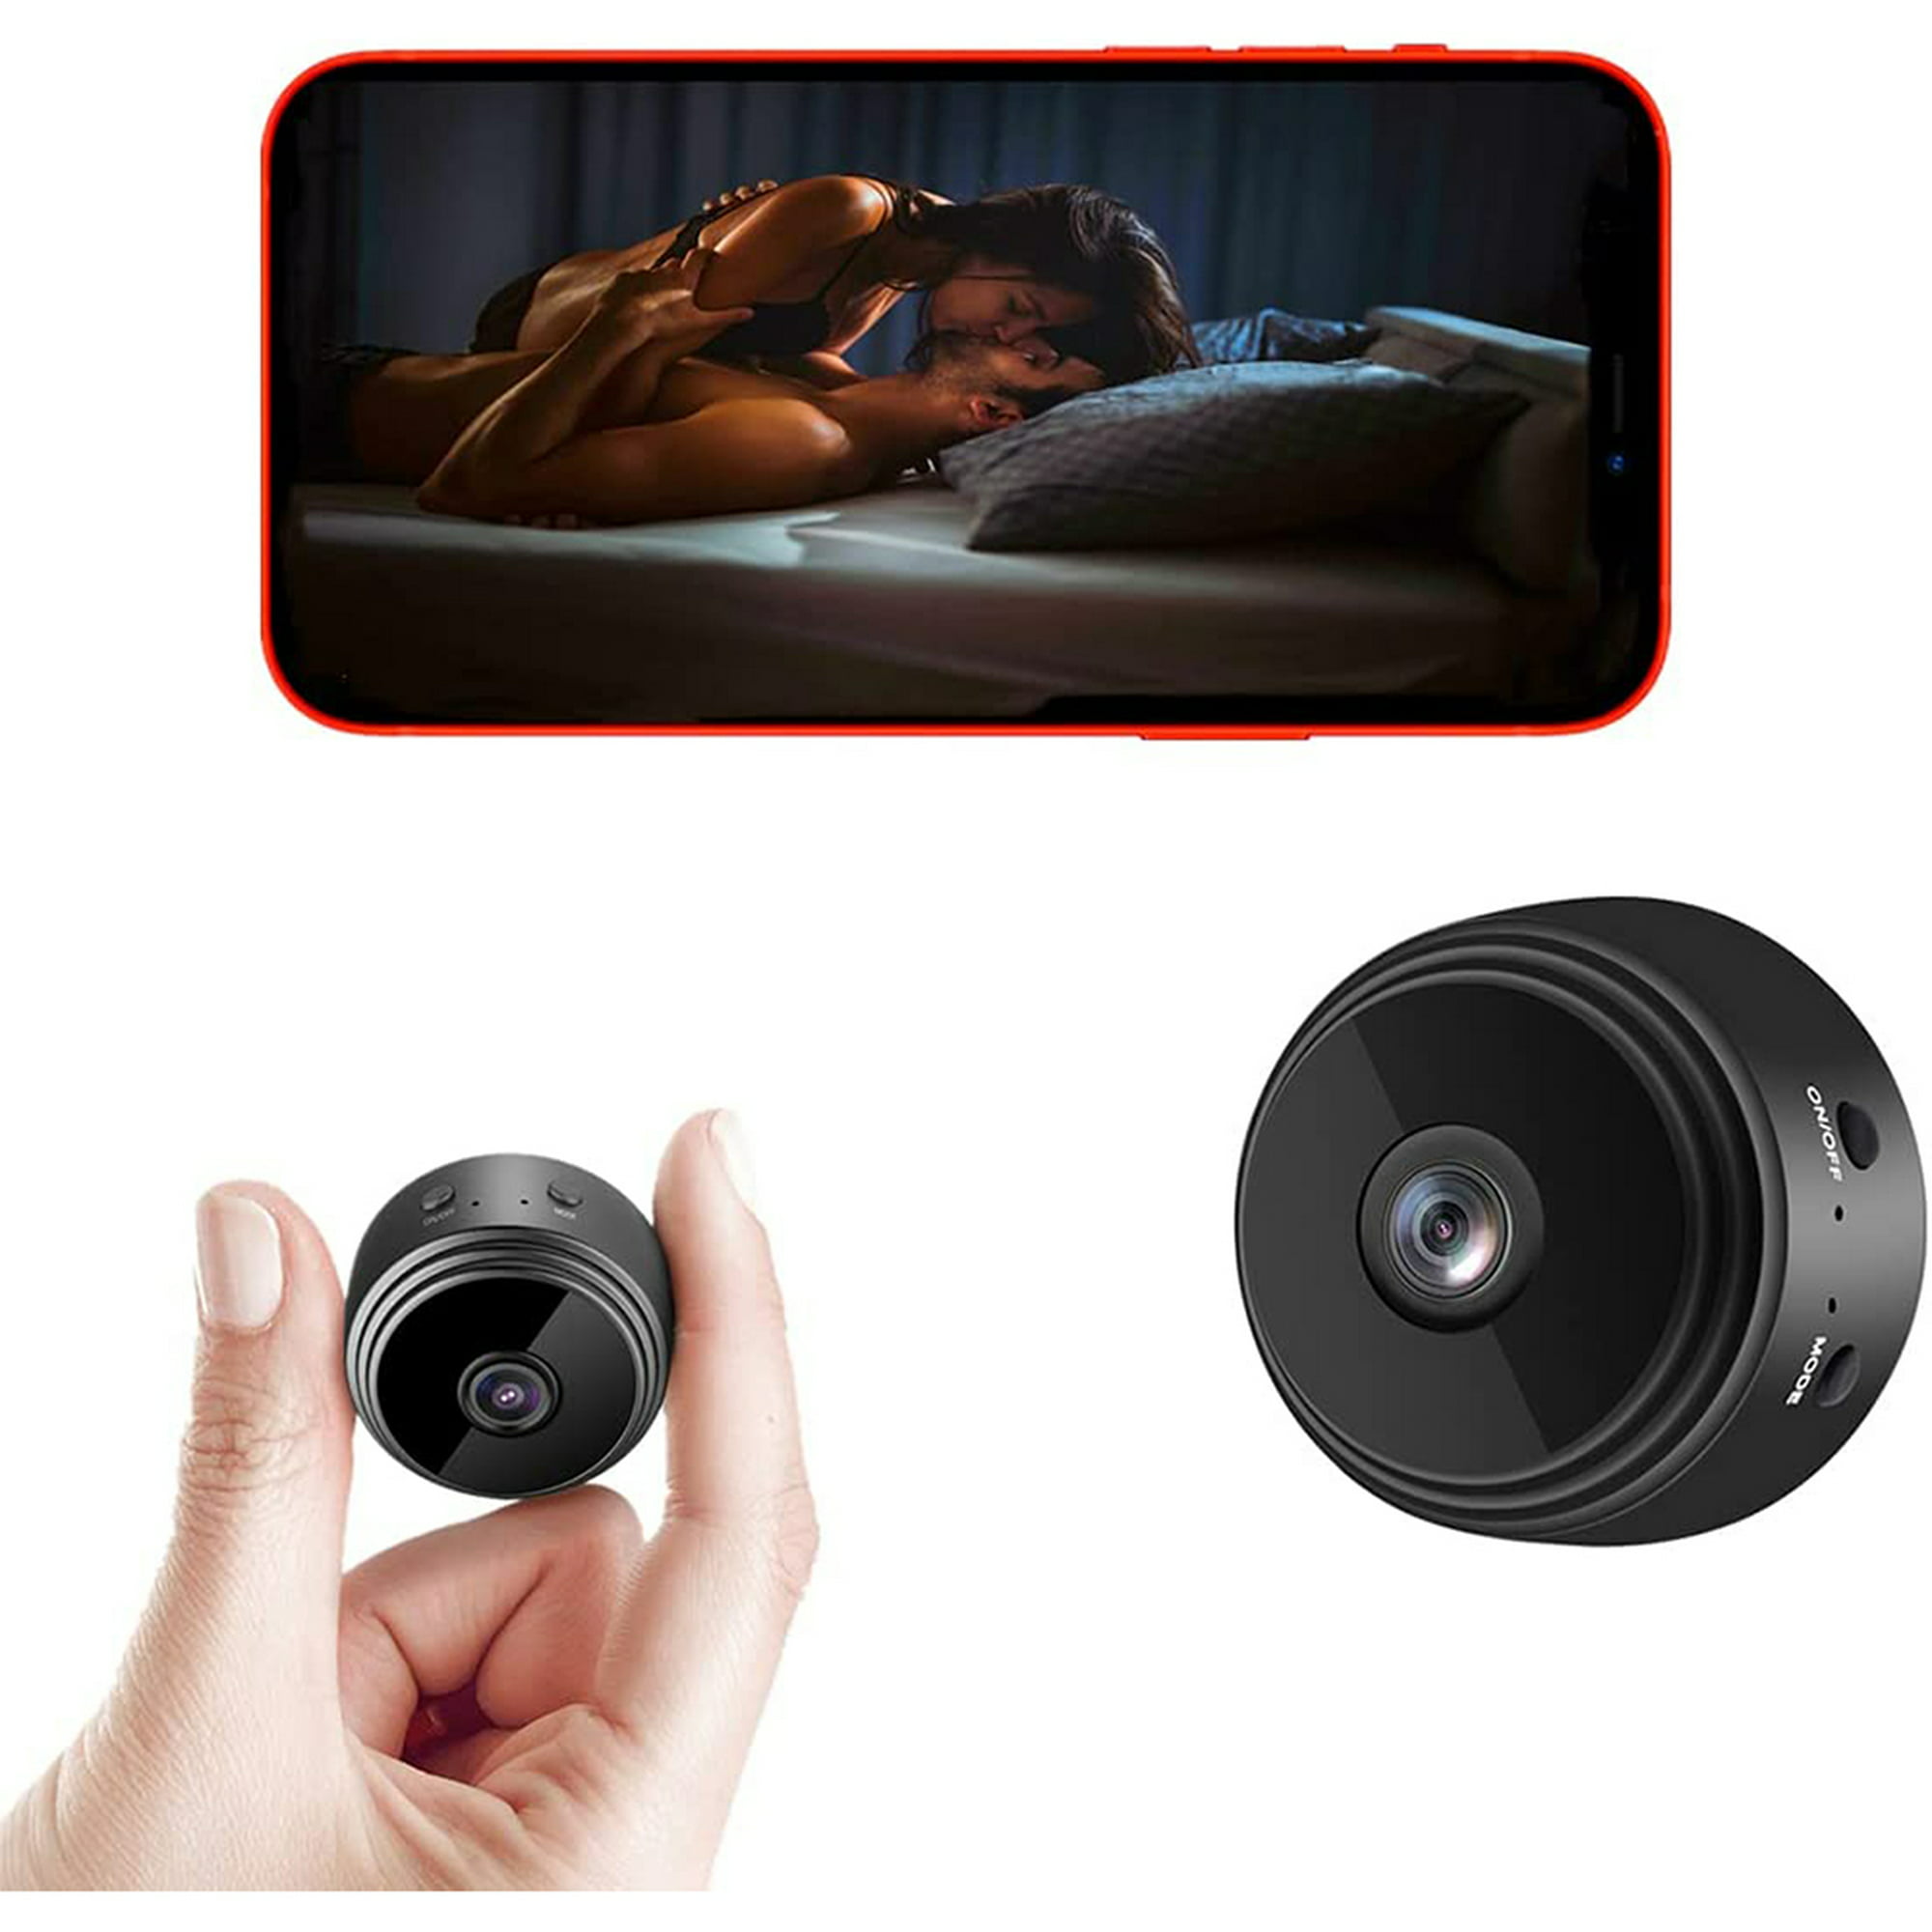 Mini cámara espía-cámara oculta-cámara WiFi inalámbrica-1080P HD Video y  cámara de audio-cámara de visión nocturna-cámara de detección de movimiento-cámara  oculta para niñera-soporte para tarjeta SD-cámara de vigilancia Full HD  Zhivalor HMKY003